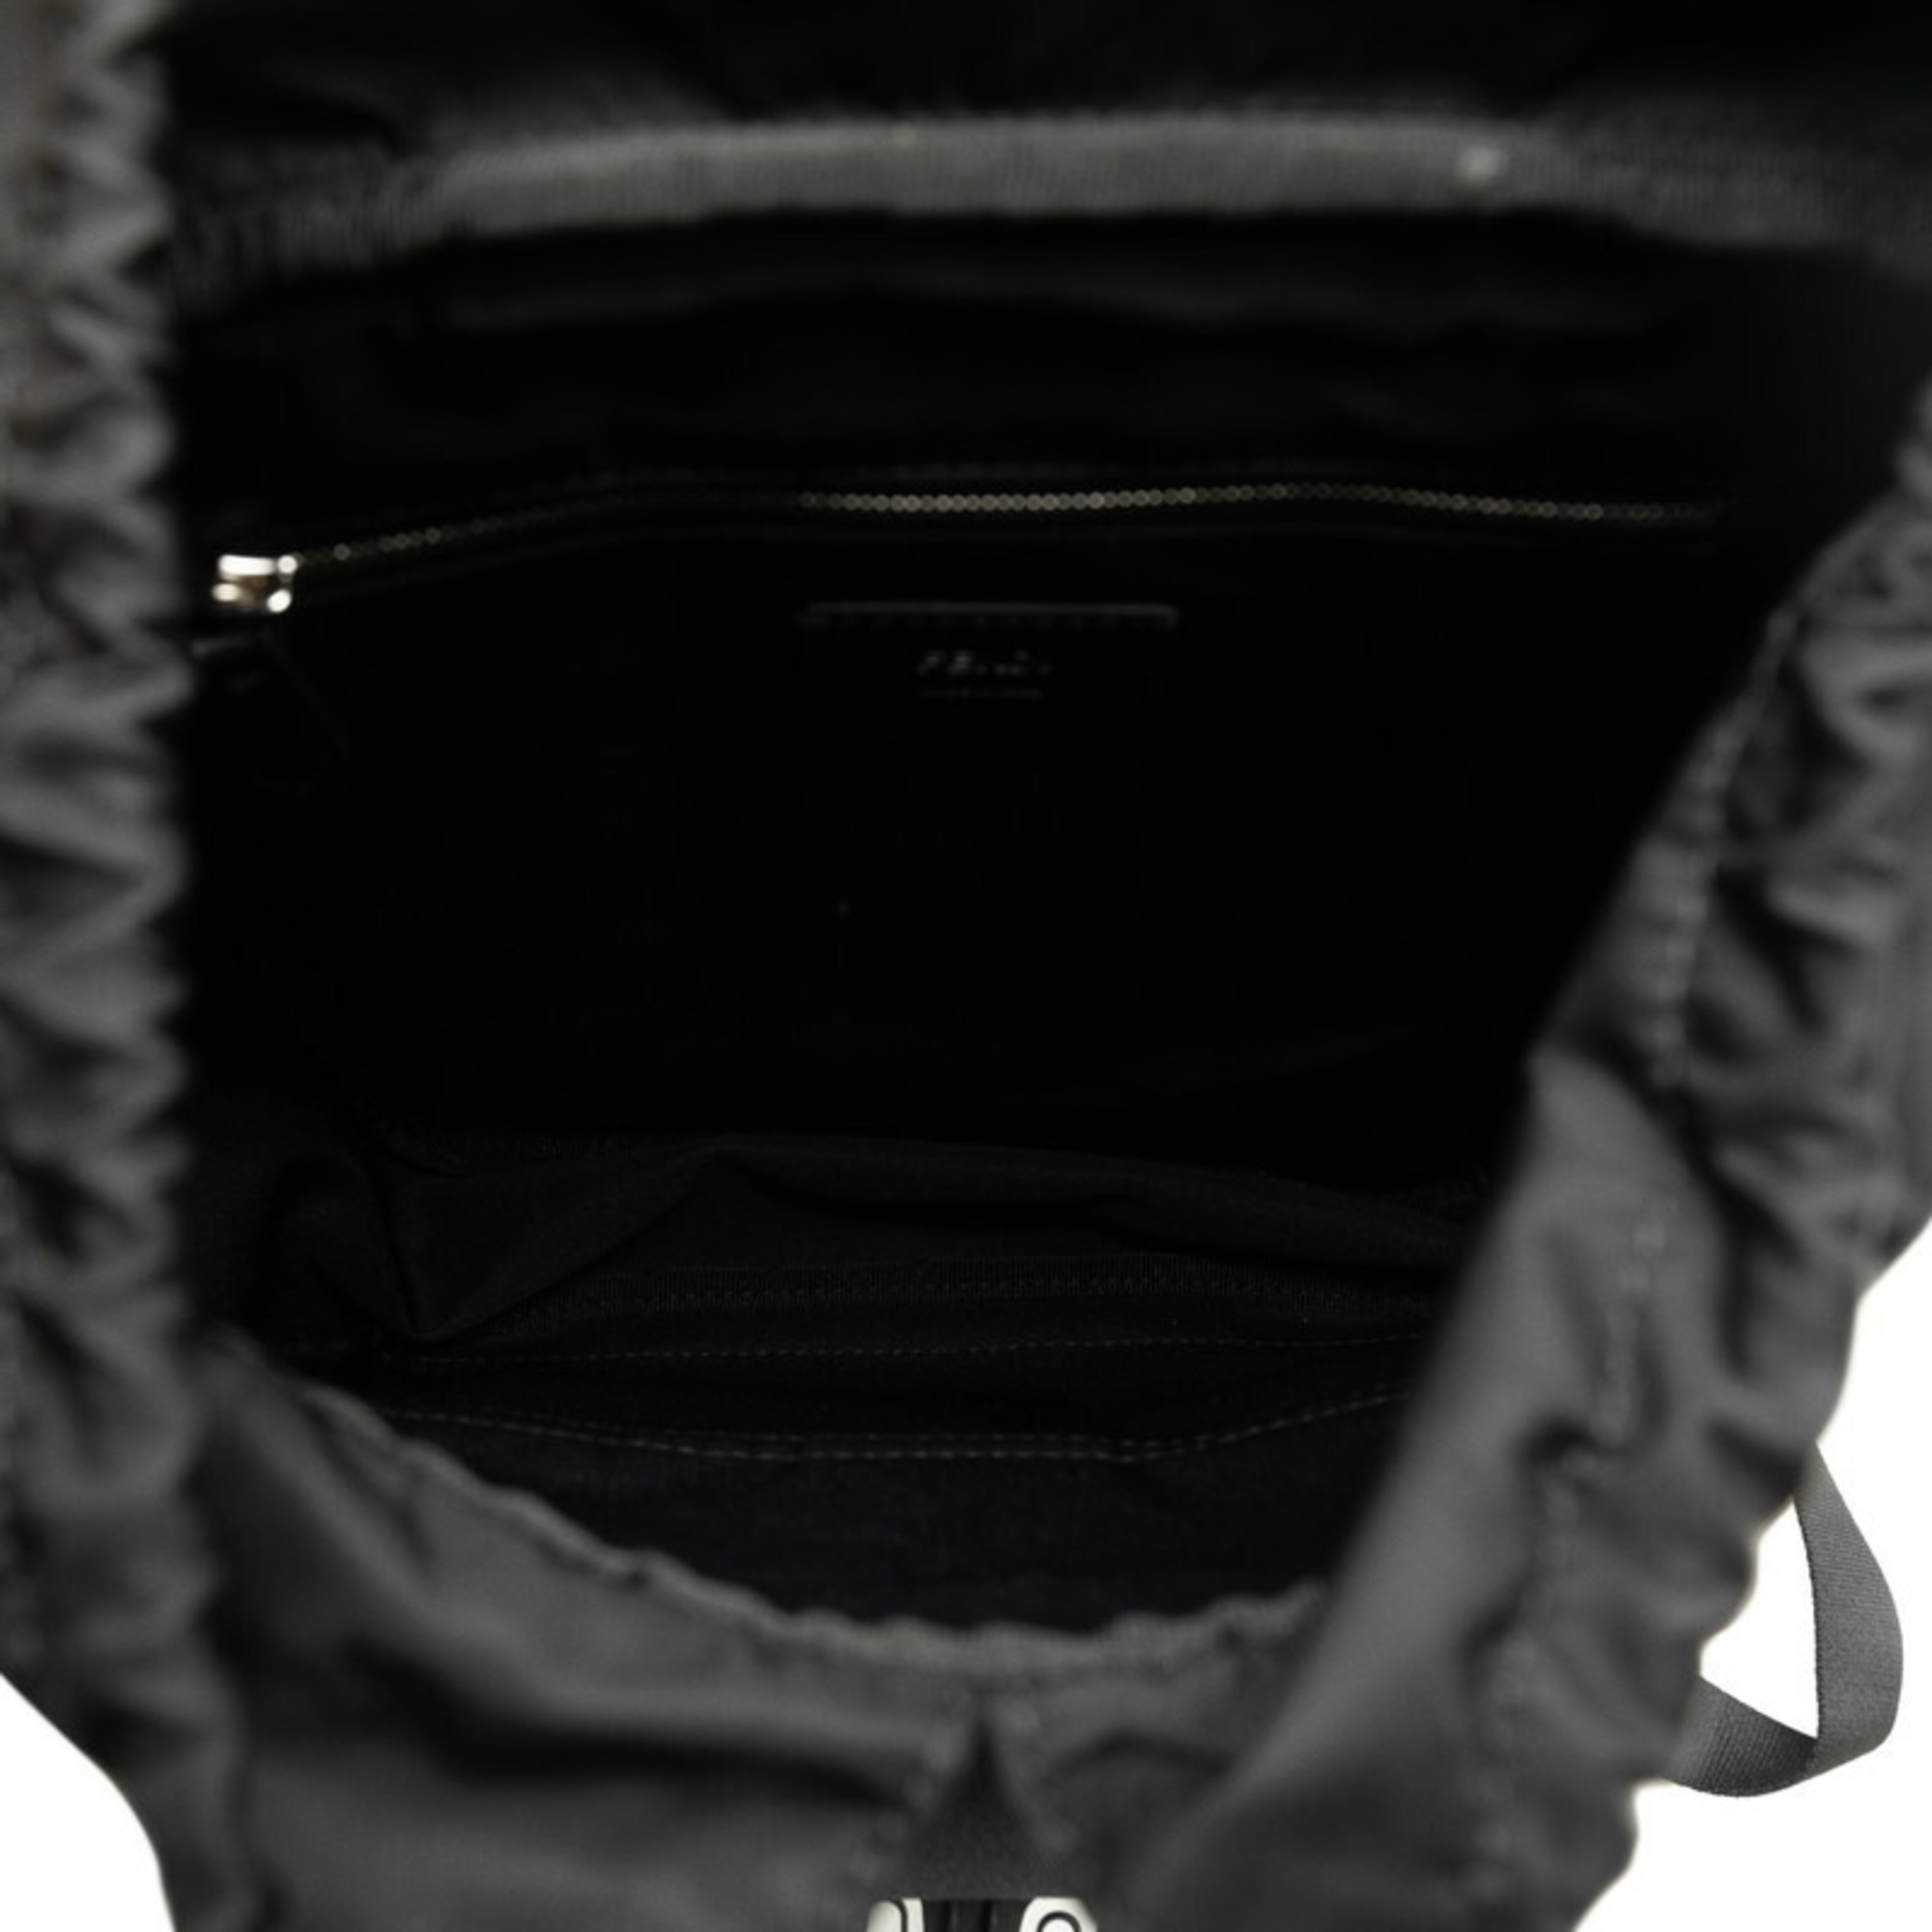 FENDI Fendines S size body bag rucksack backpack 7VZ067 AG0M black canvas leather men's